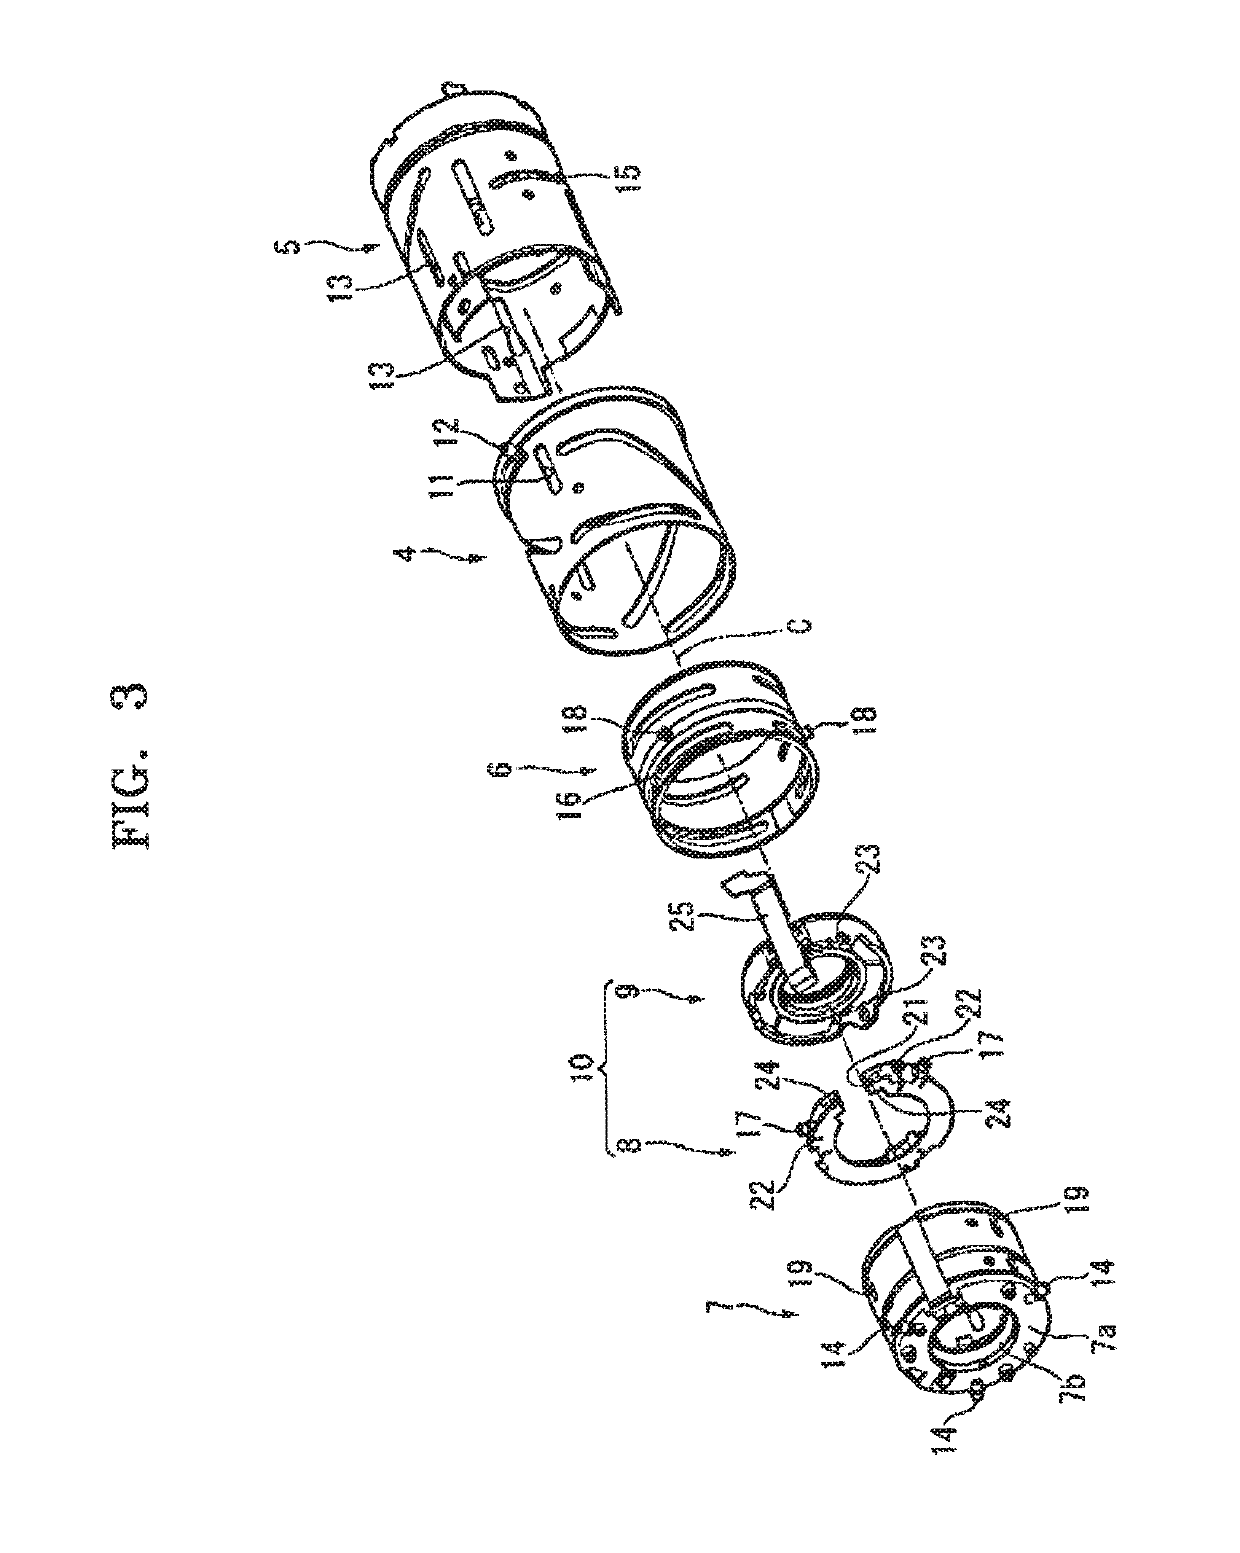 Lens barrel and optical apparatus